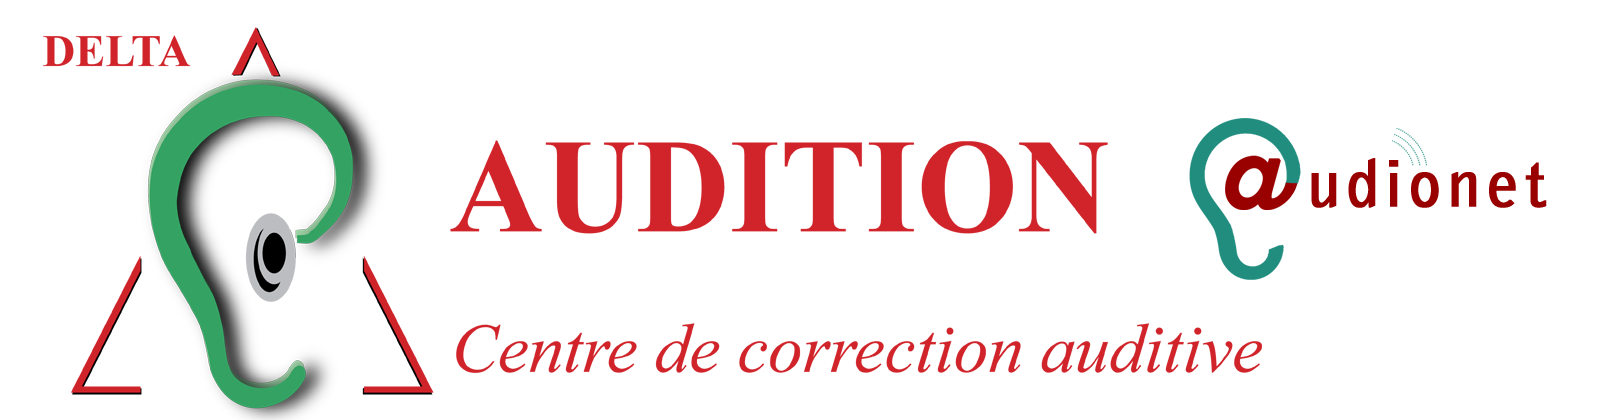 Delta Audition - Audionet